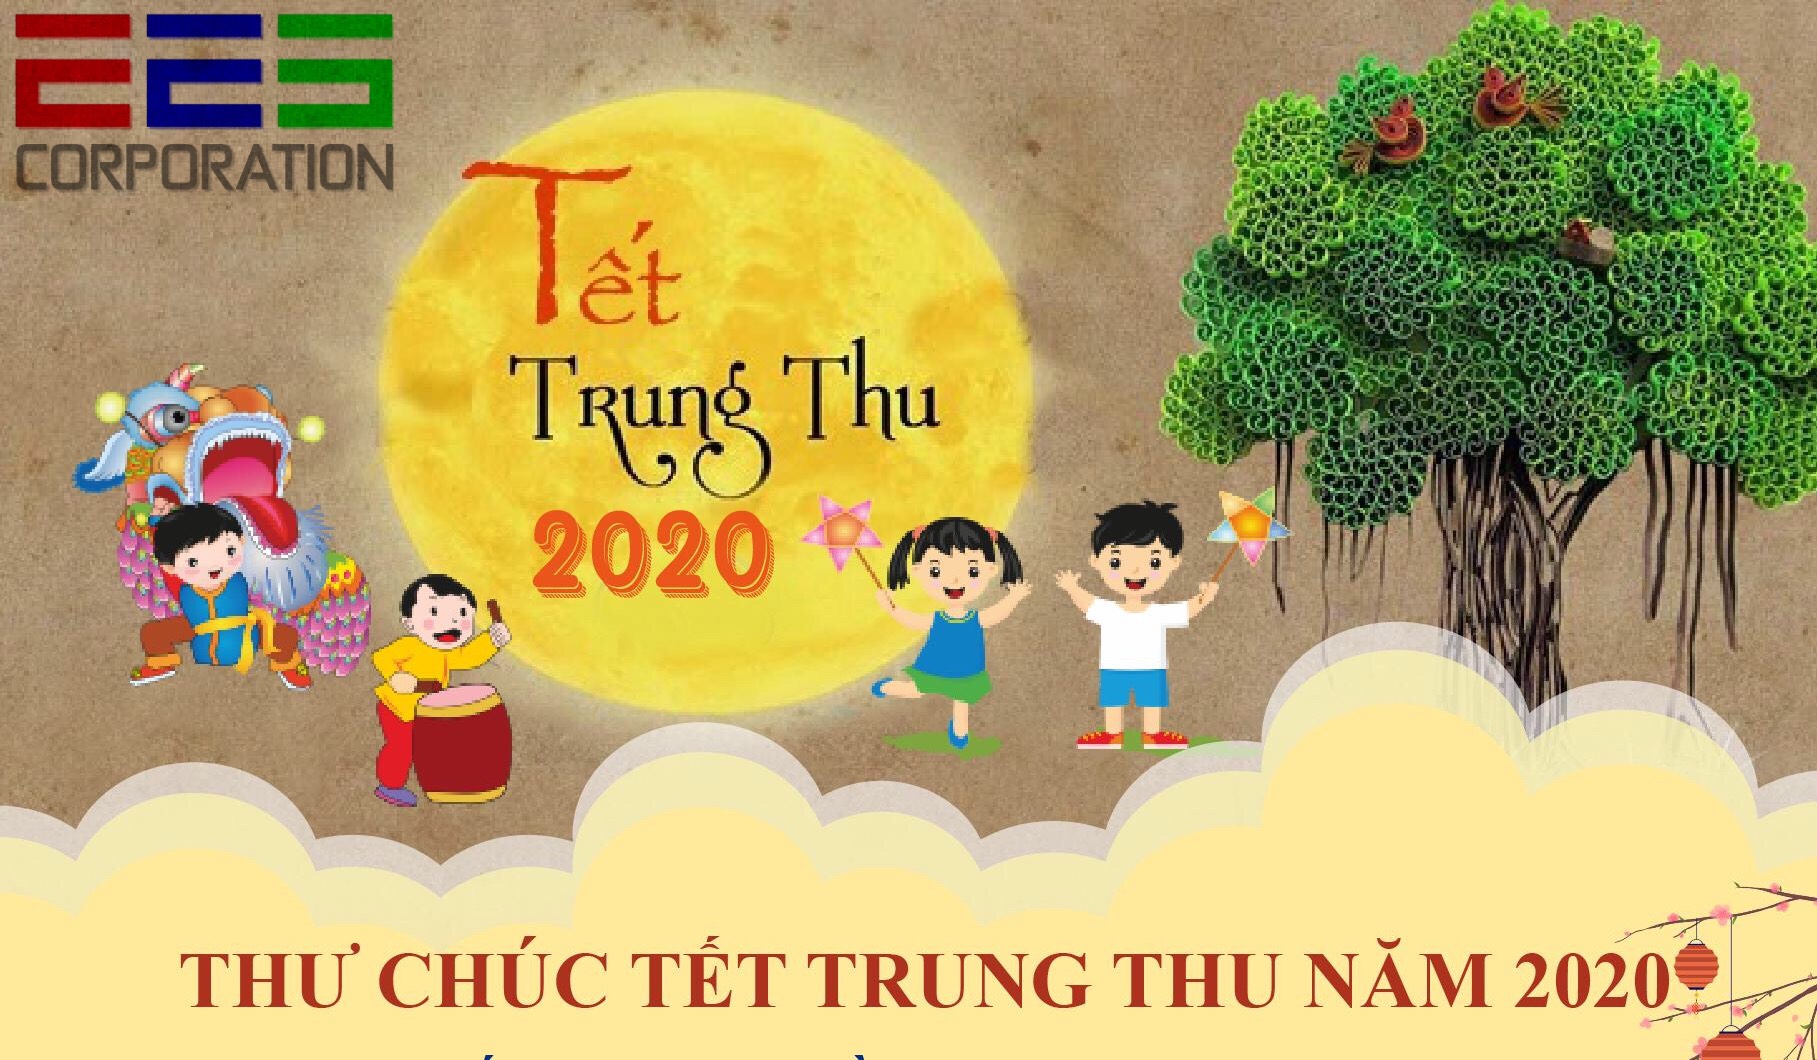 Thu Chuc Tet Trung Thu 2020